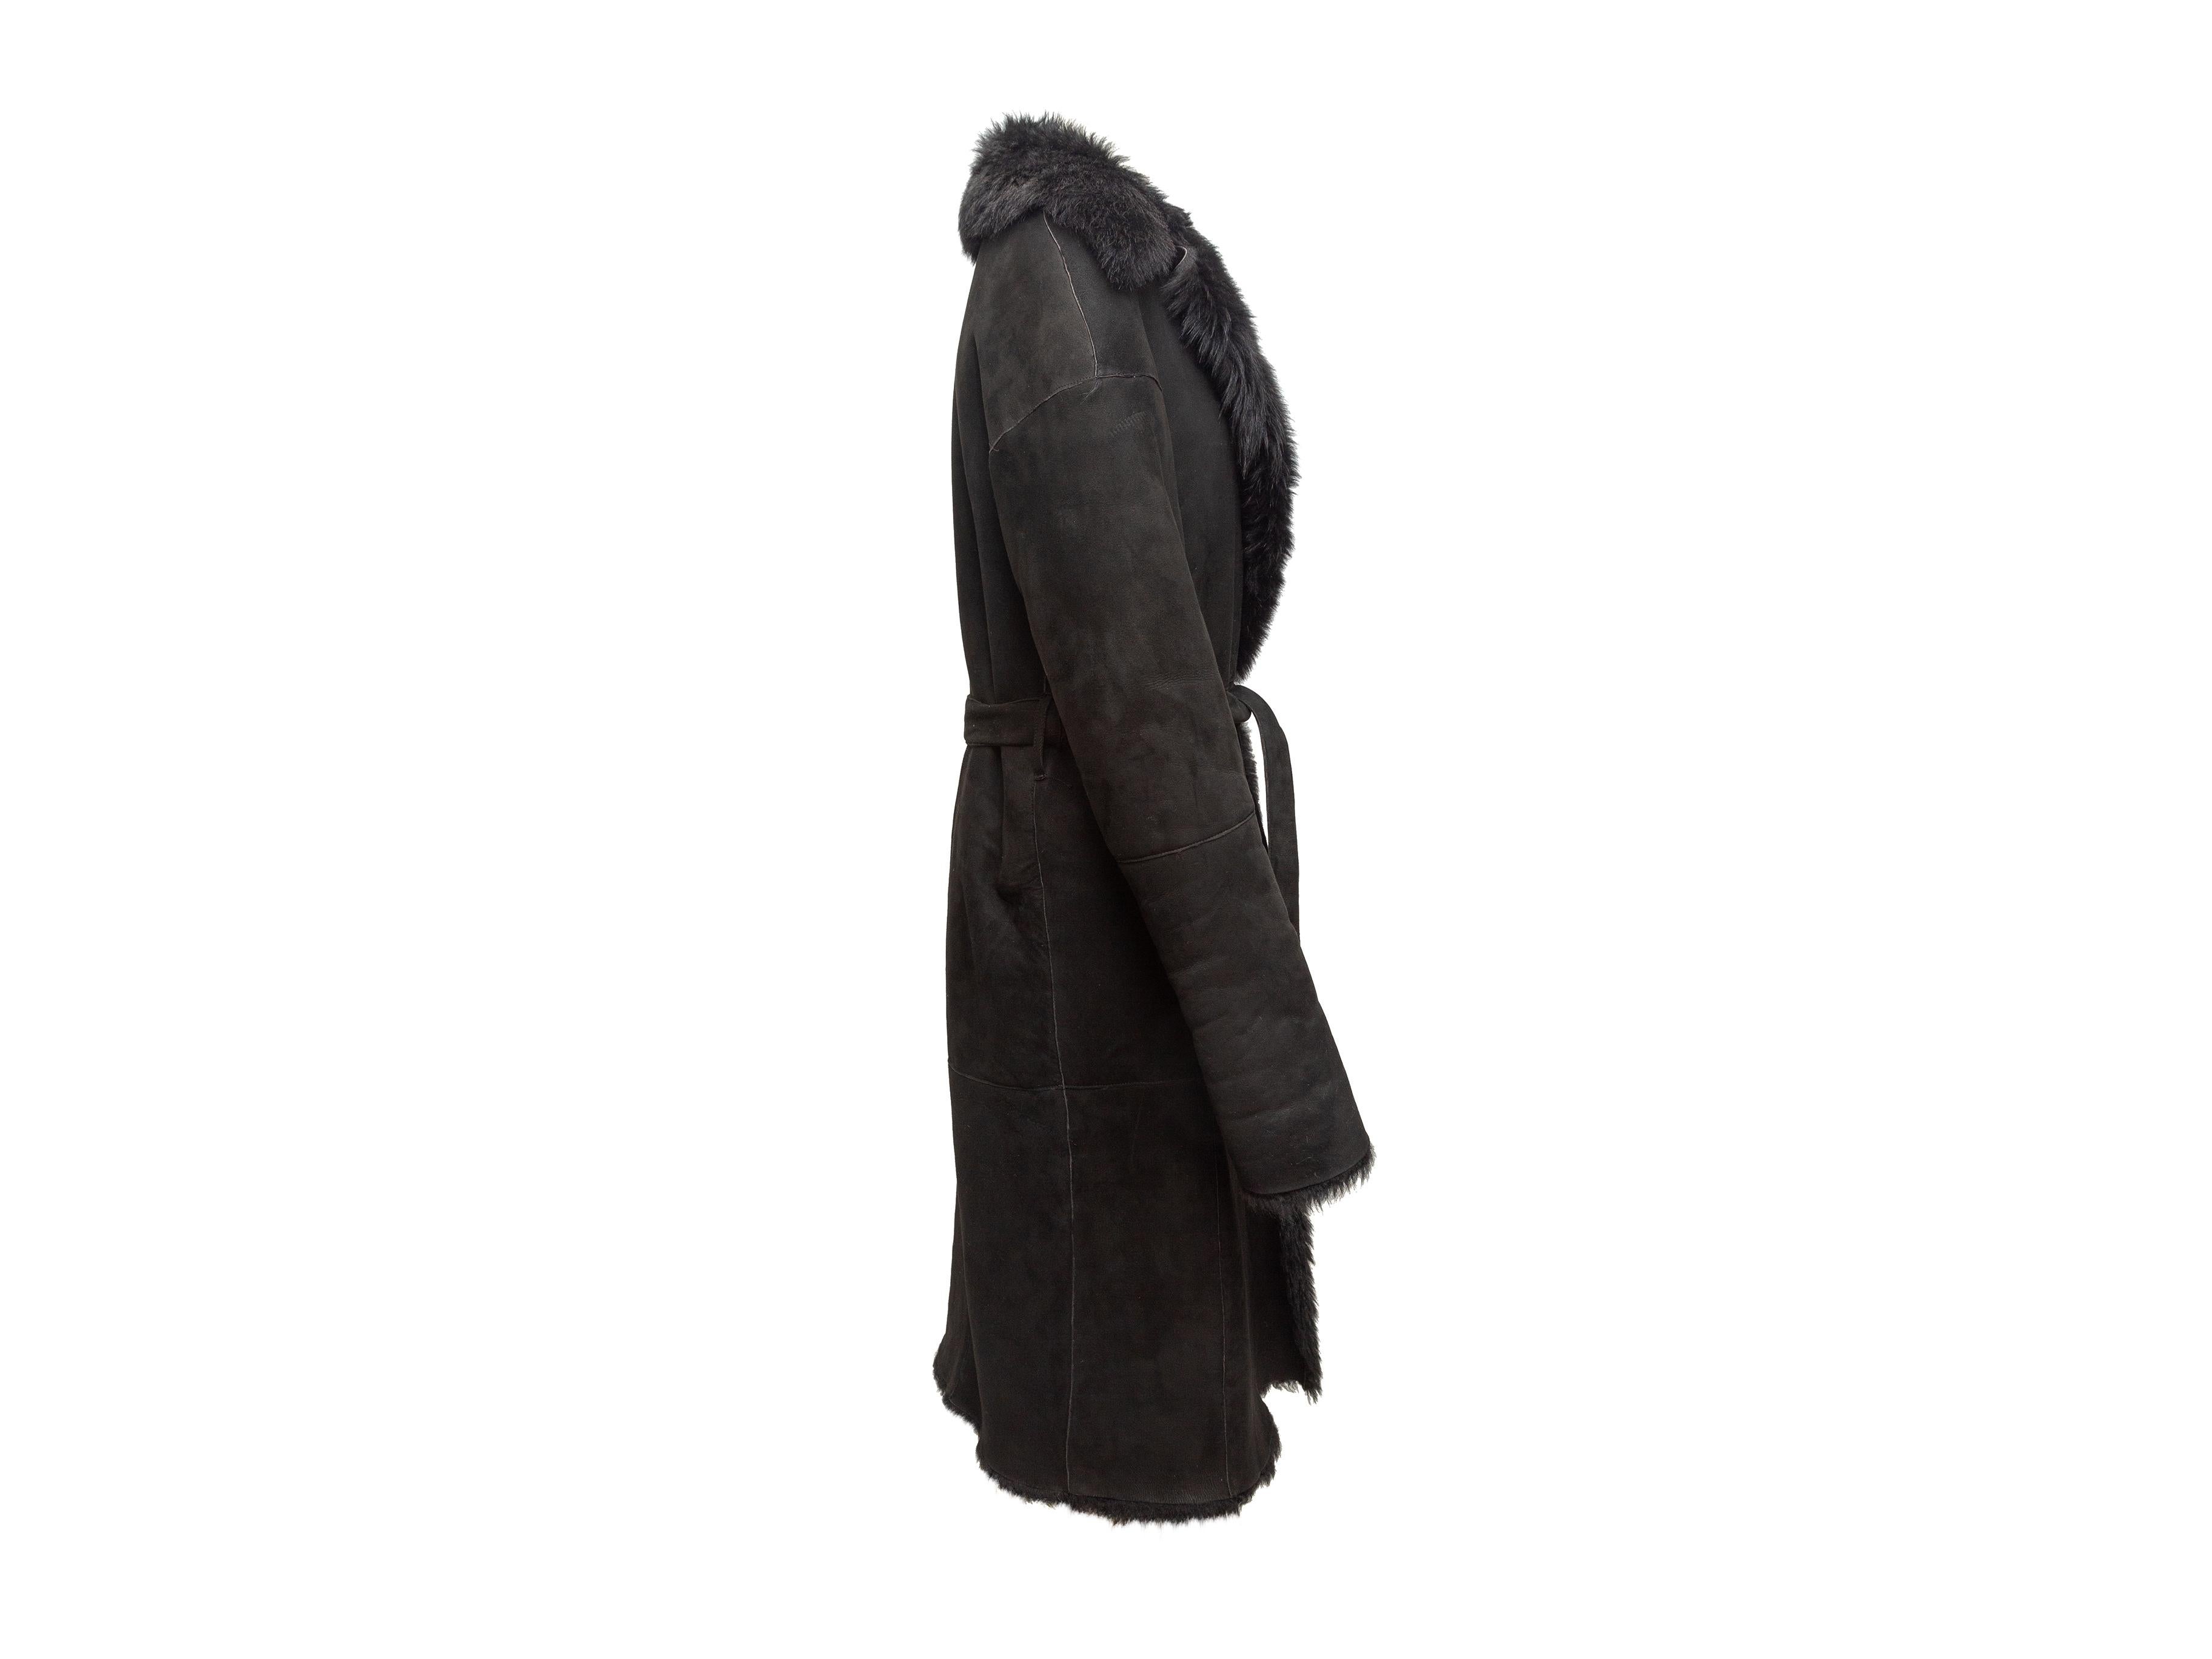 Product details: Black long shearling coat by Donna Karan. Notched collar. Sash tie at waist. 30